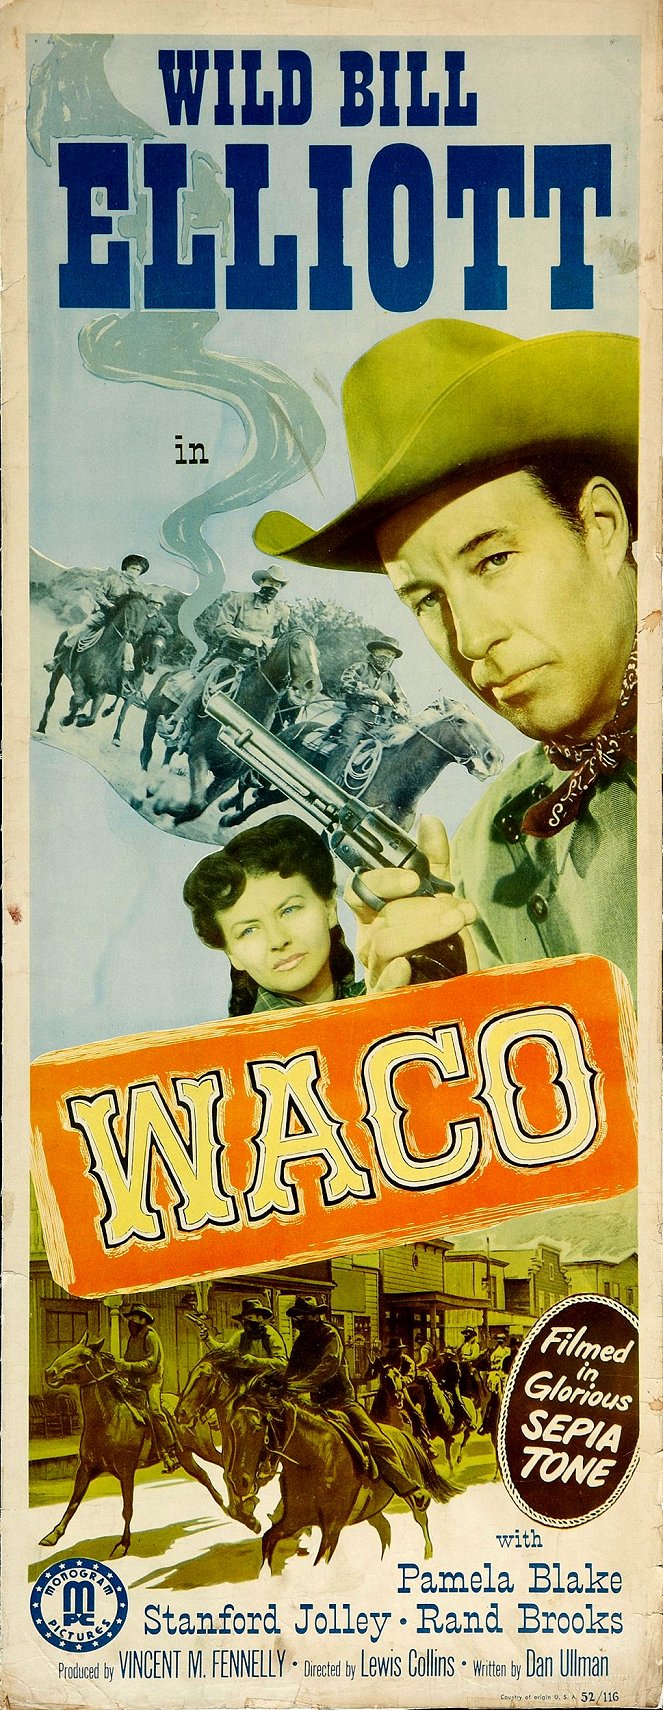 Waco - Posters